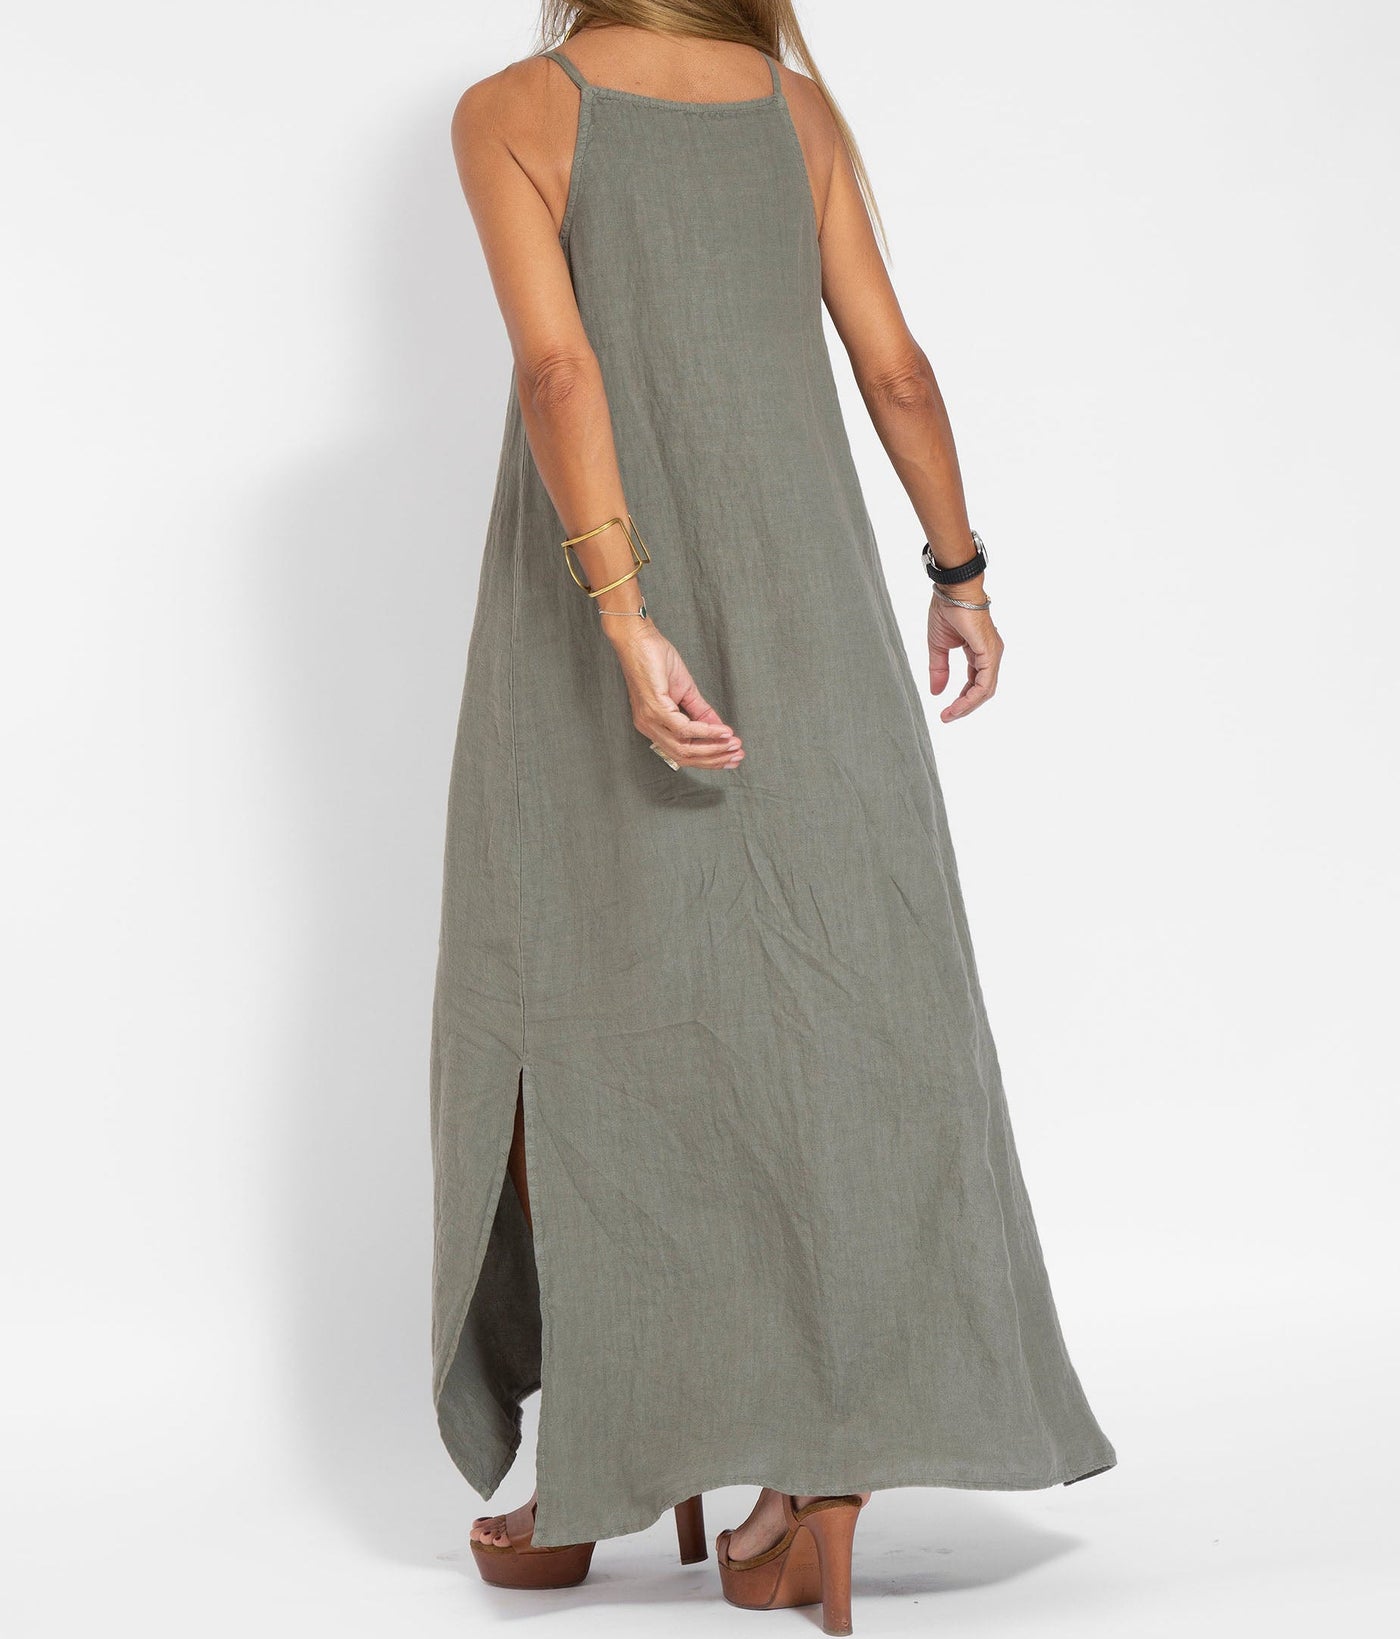 NTG Fad Elegant Solid Color Cotton Linen Sleeveless Long Dress